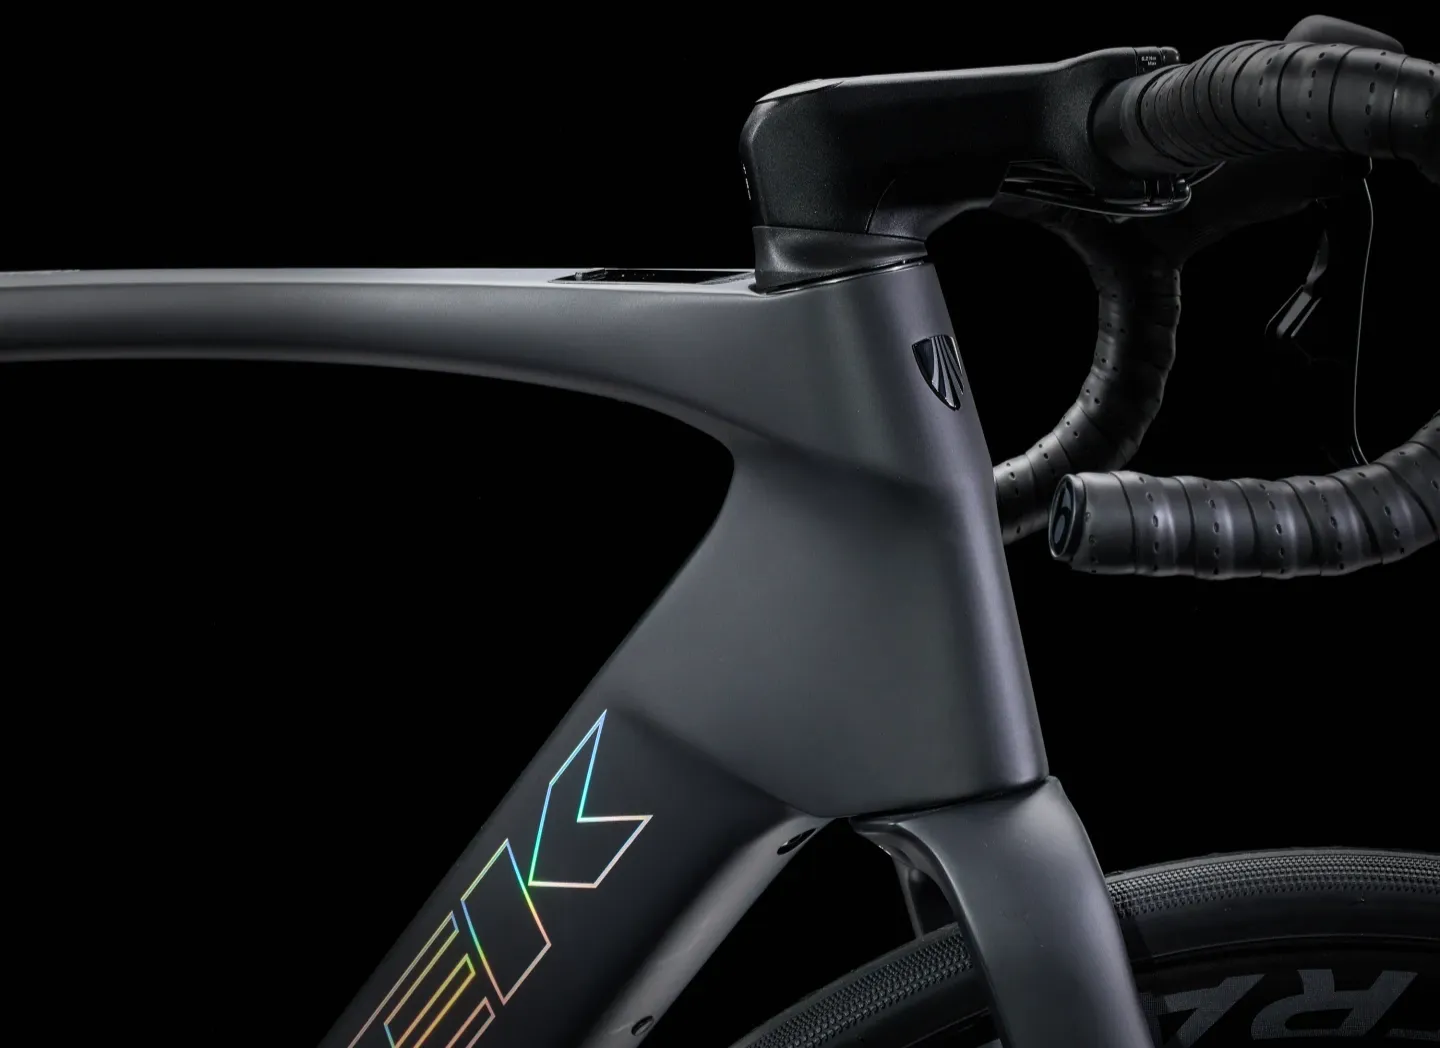 Not available Domane+ SLR 9 Electric Road Bike Cyclocross Carbon 2024 50cm Black